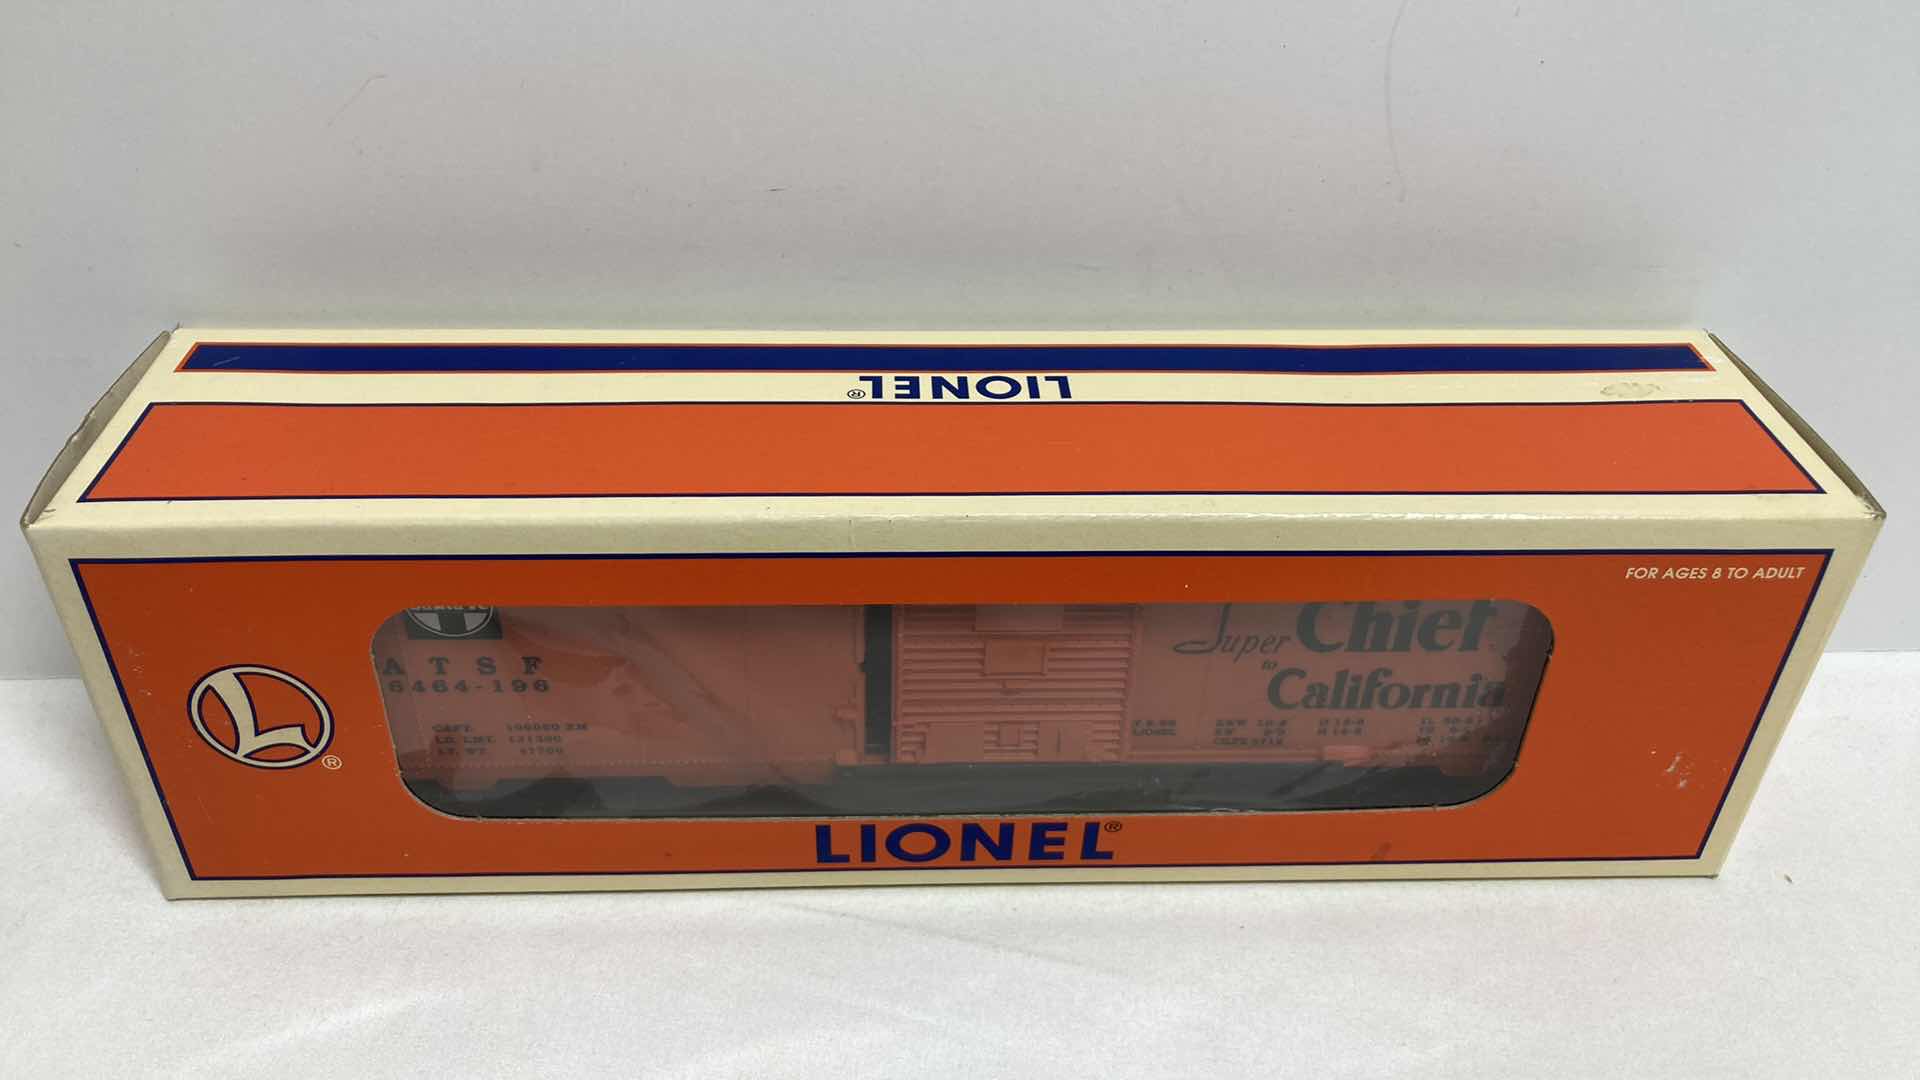 Photo 2 of LIONEL ELECTRIC TRAINS 6464-196 SUPER CHIEF TO CALIFORNIA 6-19282 BOX CAR